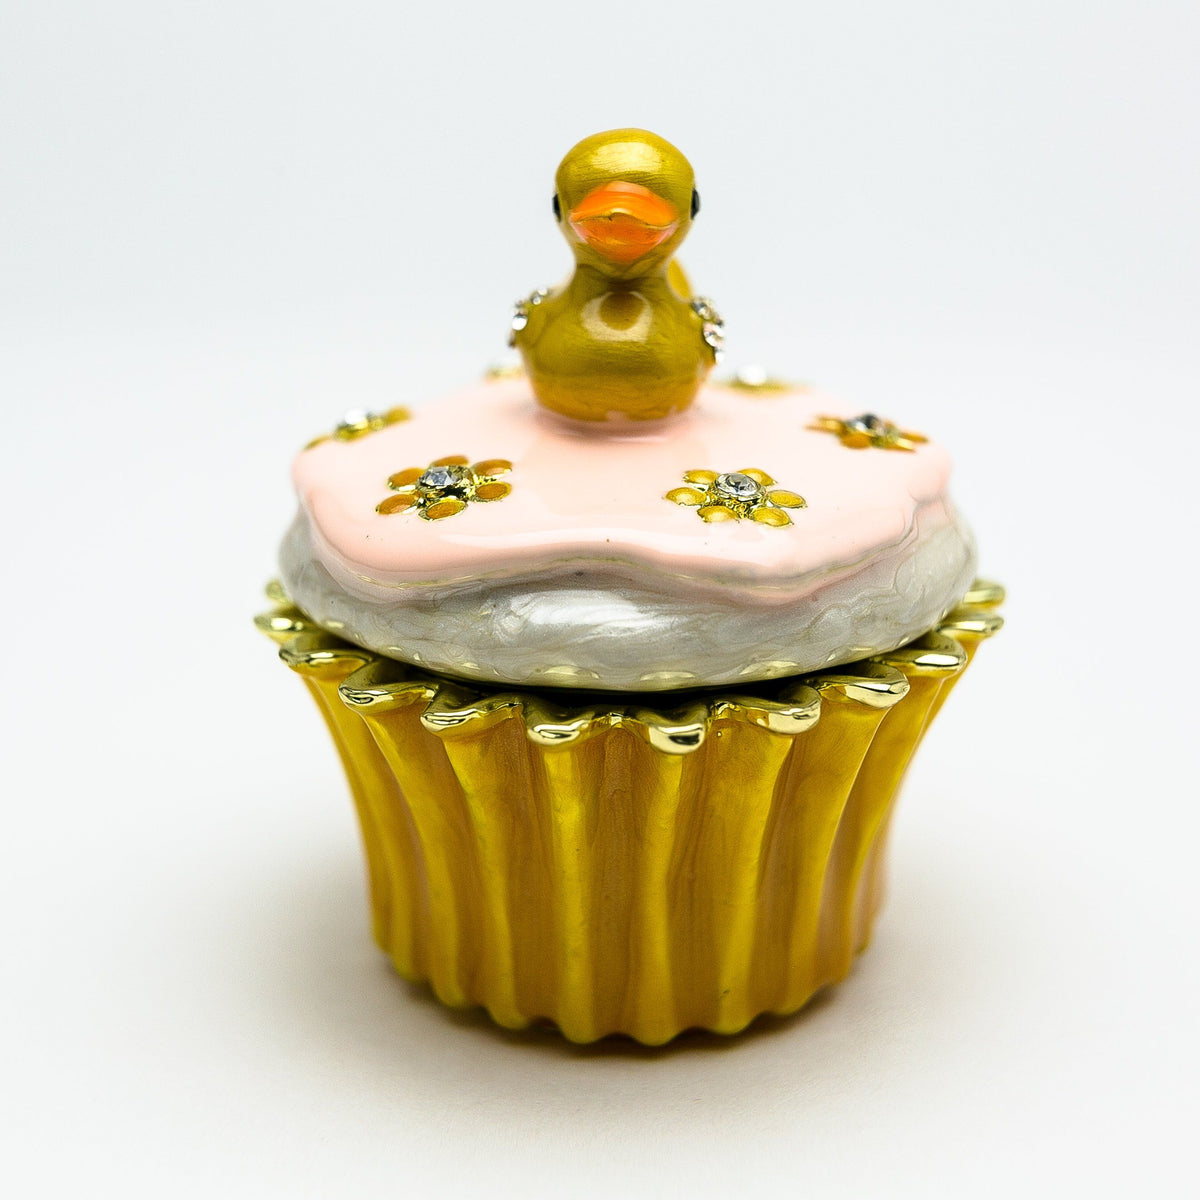 Yellow Duck on Cupcake Baby Shower Keren Kopal